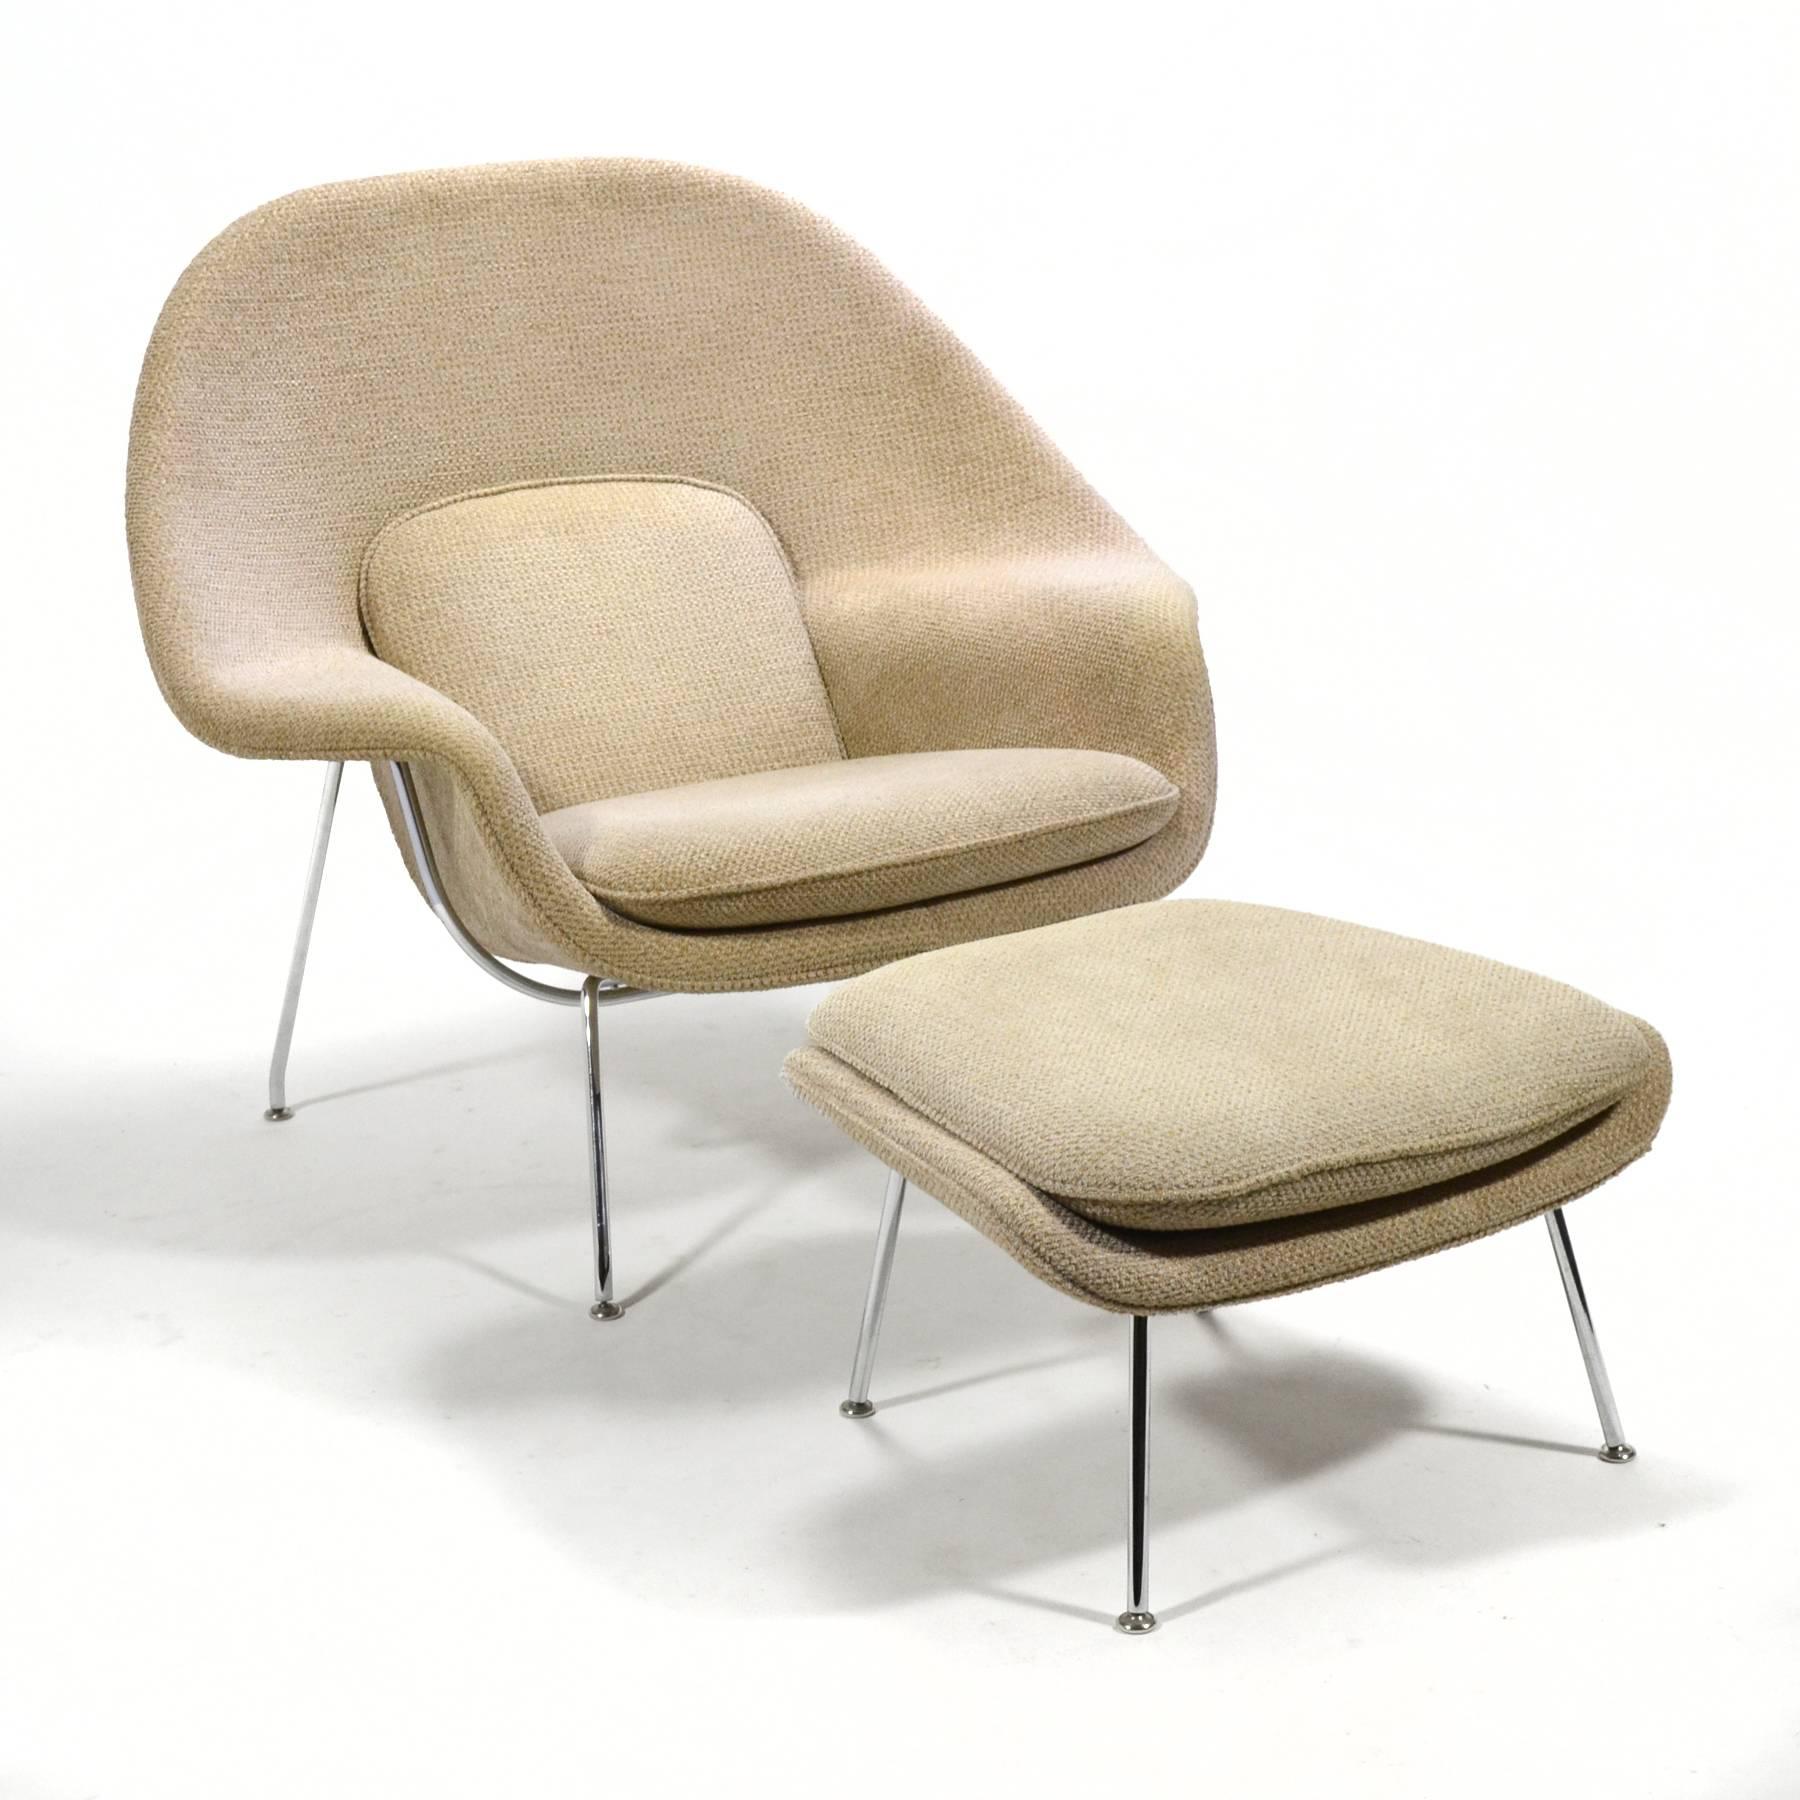 Mid-20th Century Eero Saarinen Womb Chair and Ottoman by Knoll